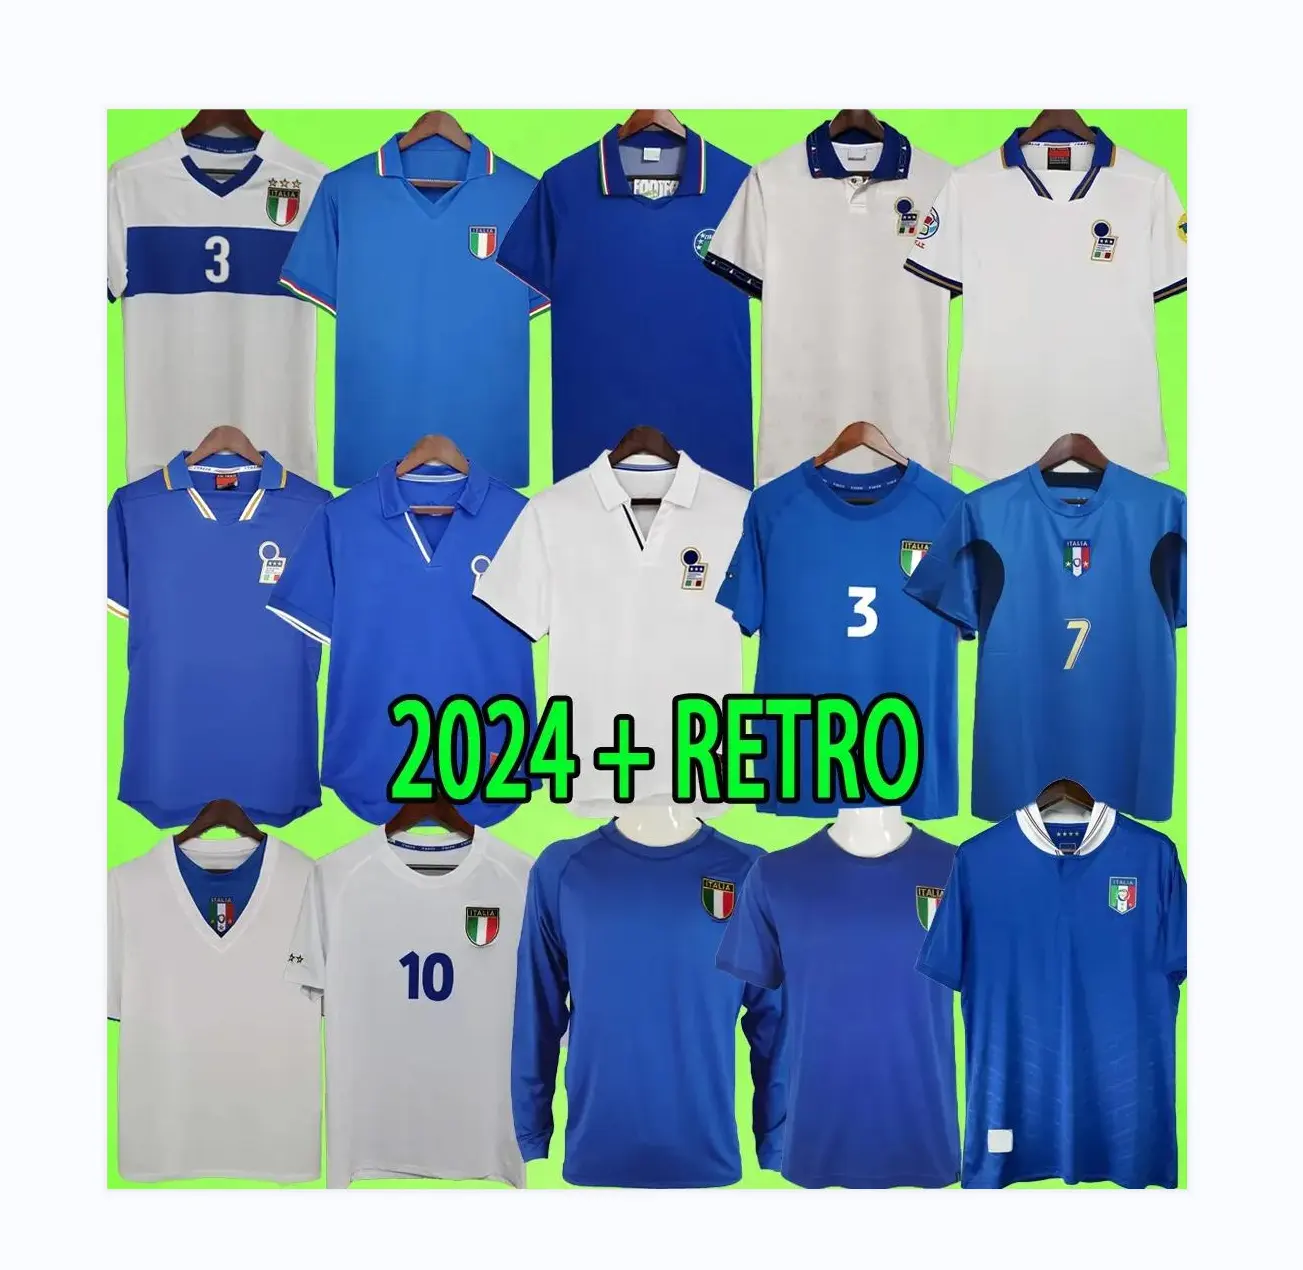 Retro Italia camisetas de fútbol 1979 1982 1988 1990 1994 1996 1998 2000 2002 2004 2006 2012 camiseta de fútbol Italia uniforme para hombre